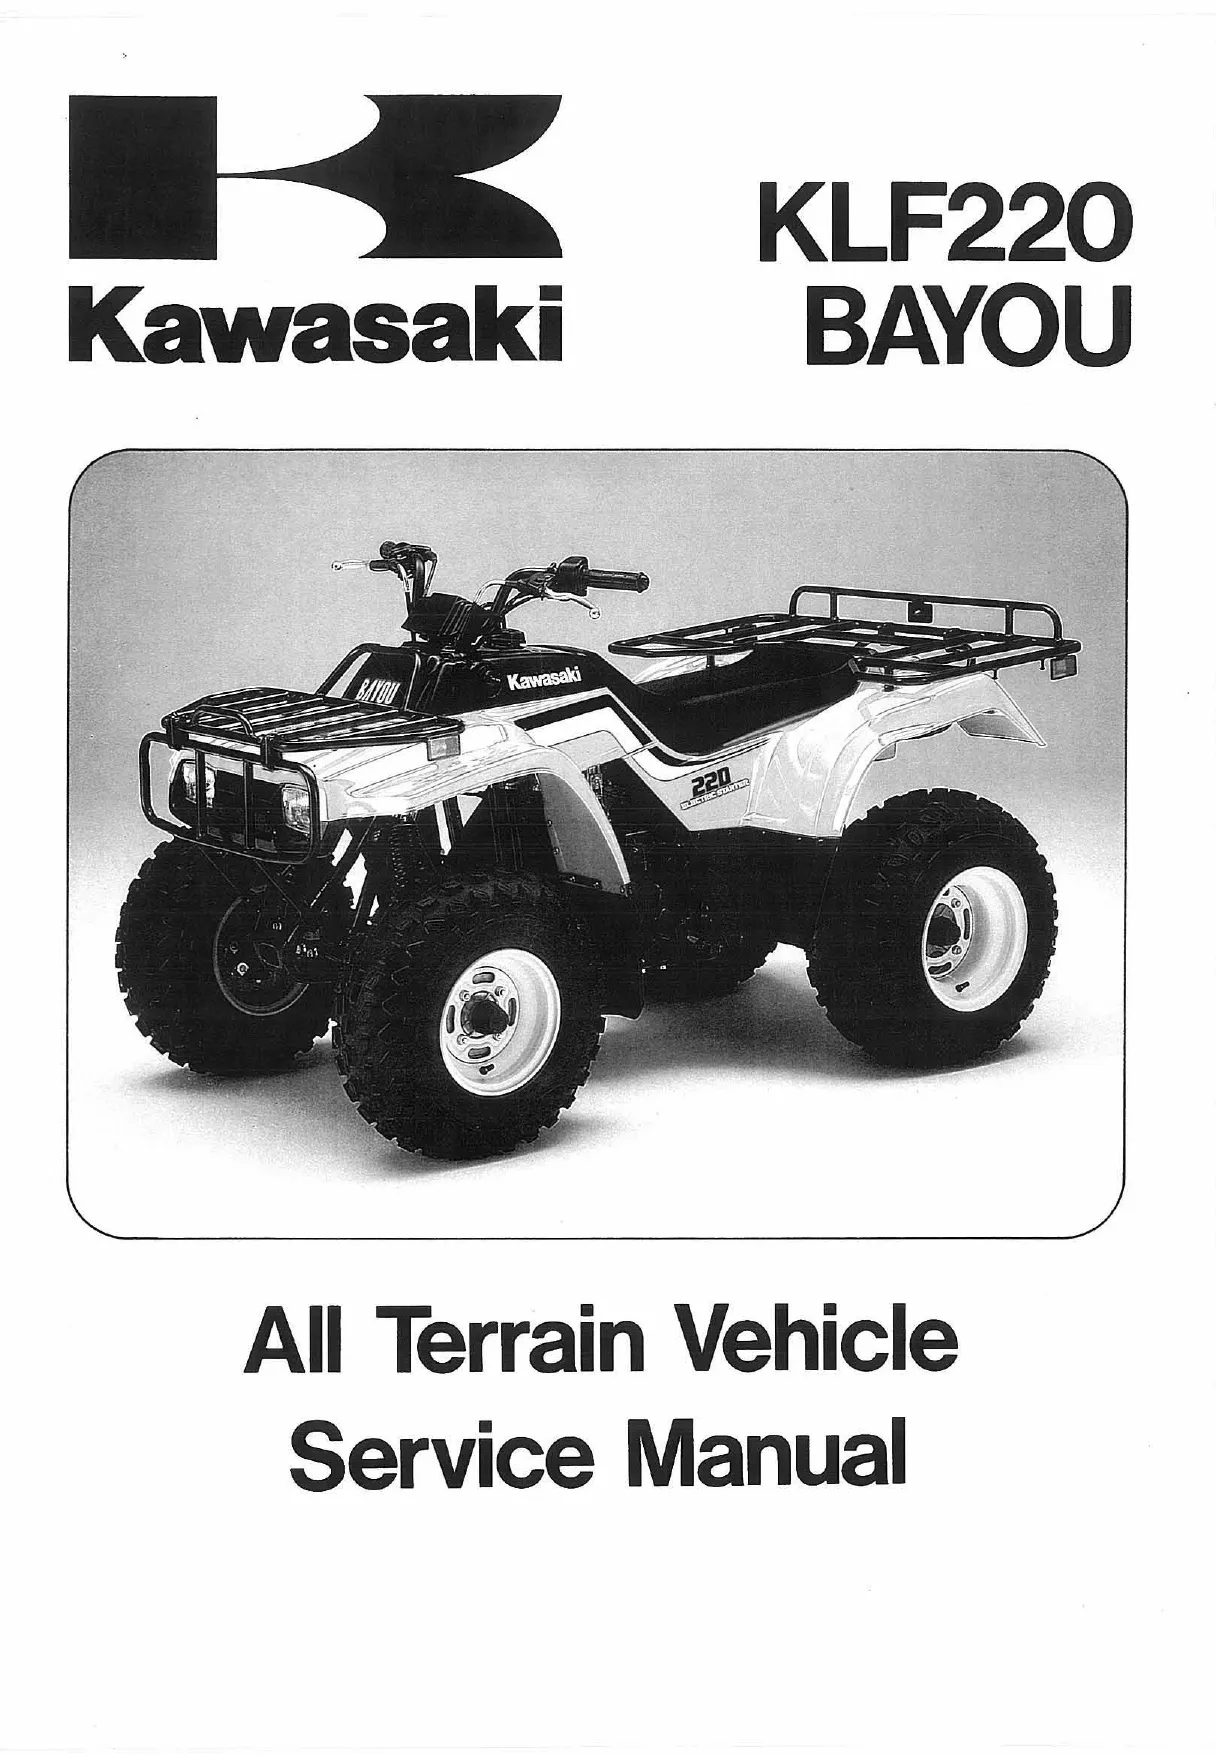 1988-2002 Kawasaki Bayou 220, KLF220A repair manual Preview image 1